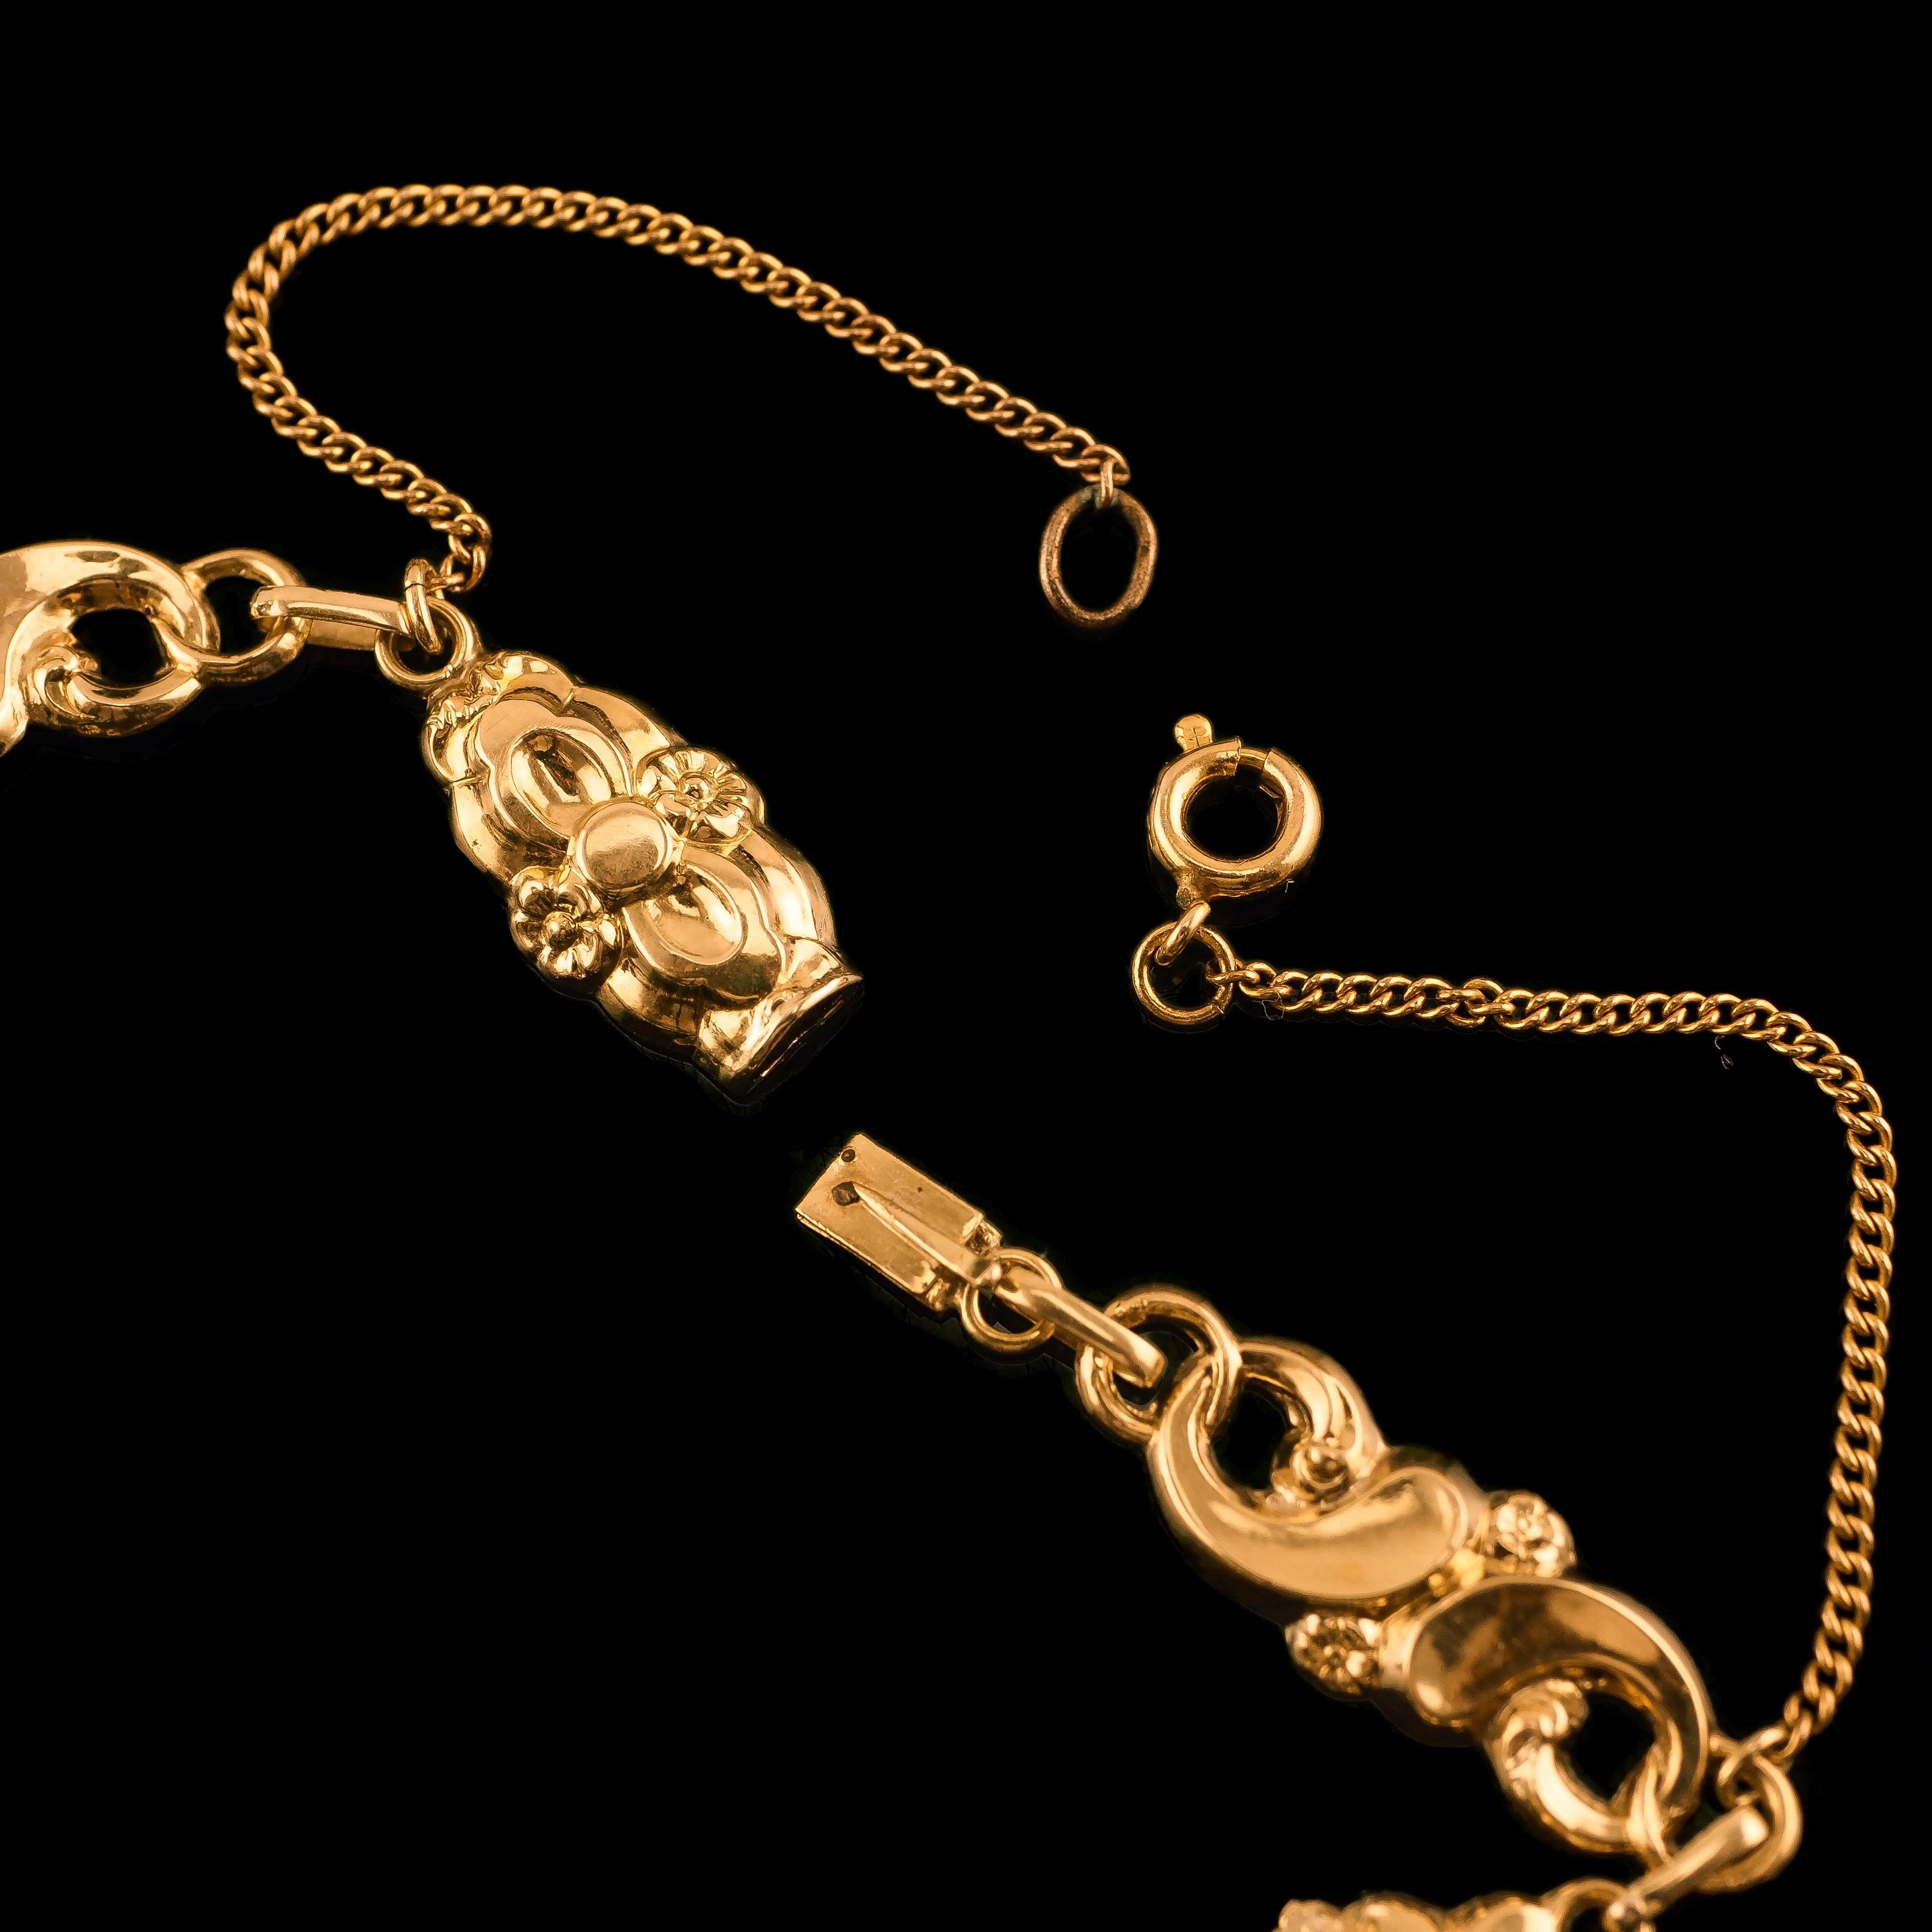 Antique Victorian 18K Gold Garnet Necklace in Baroque Revival Style, c.1840 8